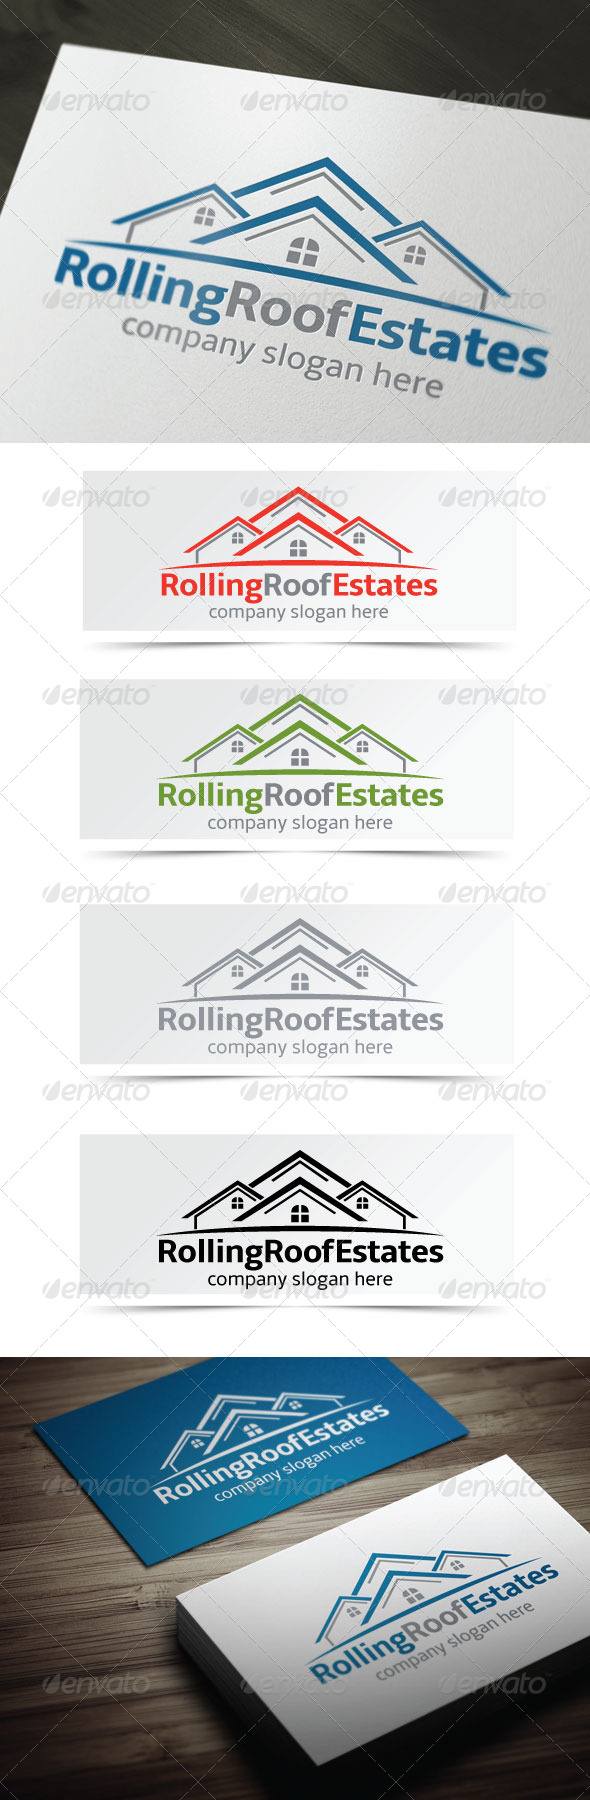 Rolling Roof Estates